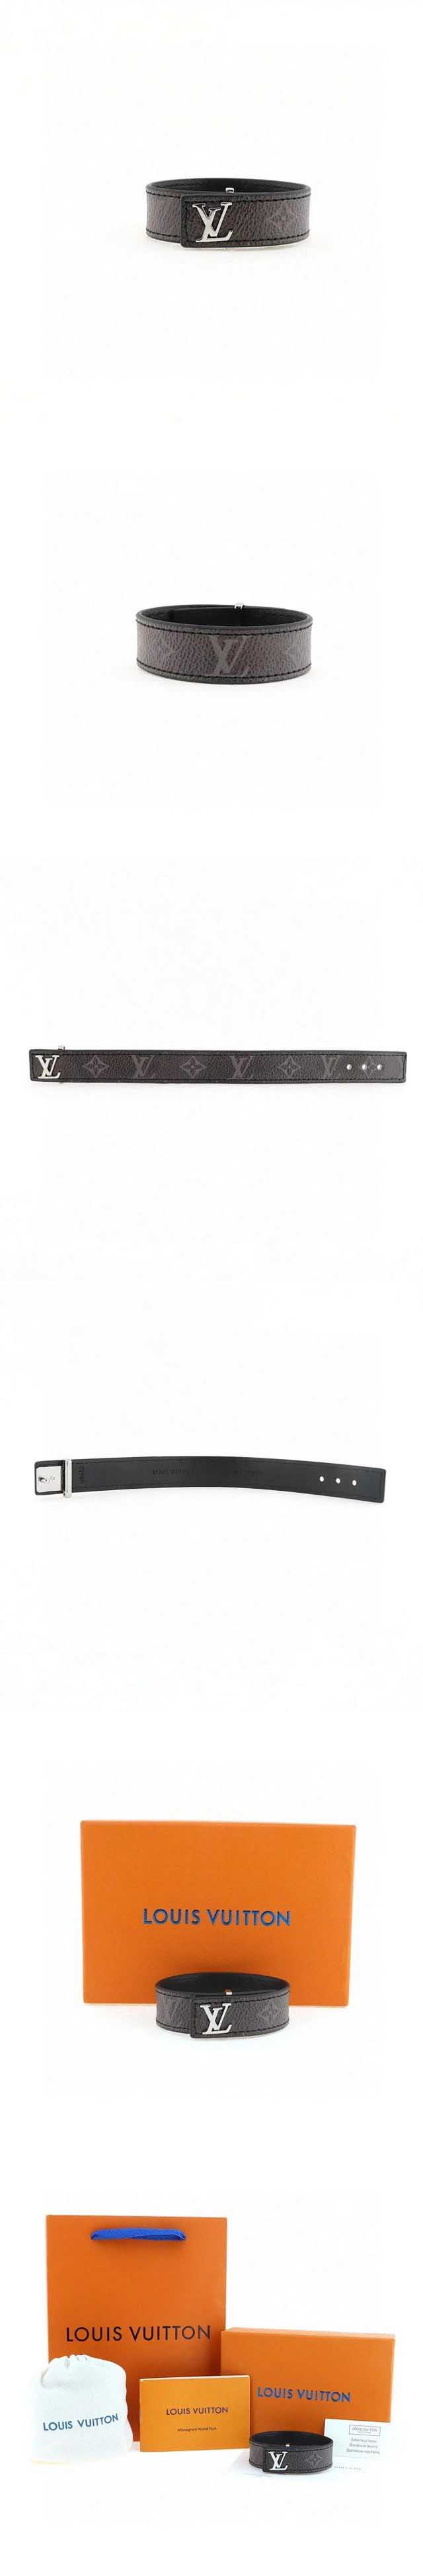 Louis Vuitton LV Monogram Black Bracelet ルイヴィトン LV モノグラム ブラック ブレスレット